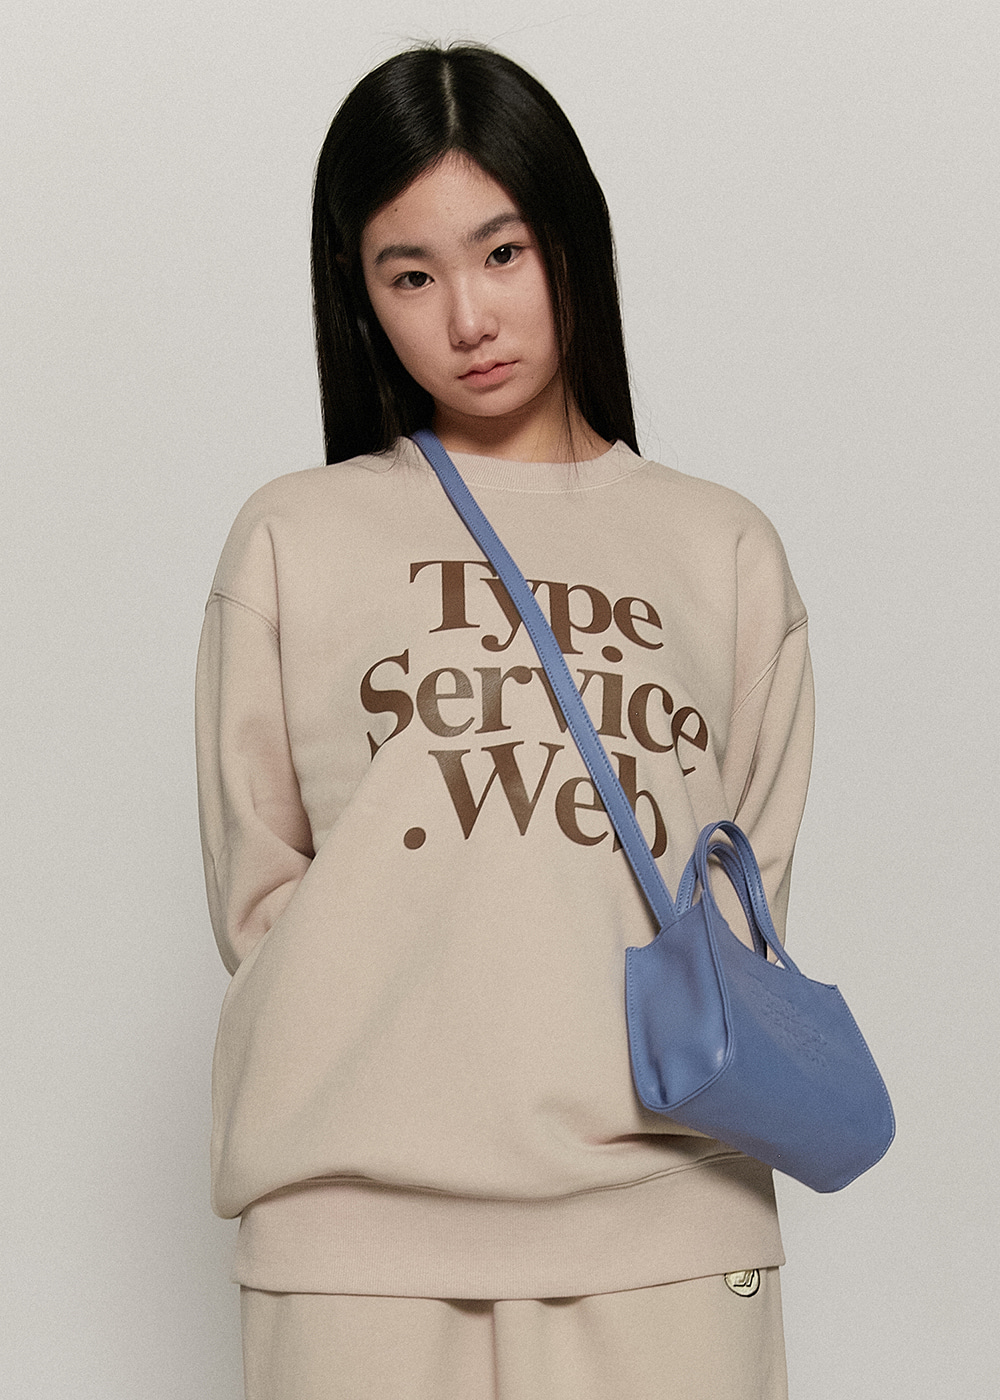 TYPESERVICE Web Sweatshirts [Beige]